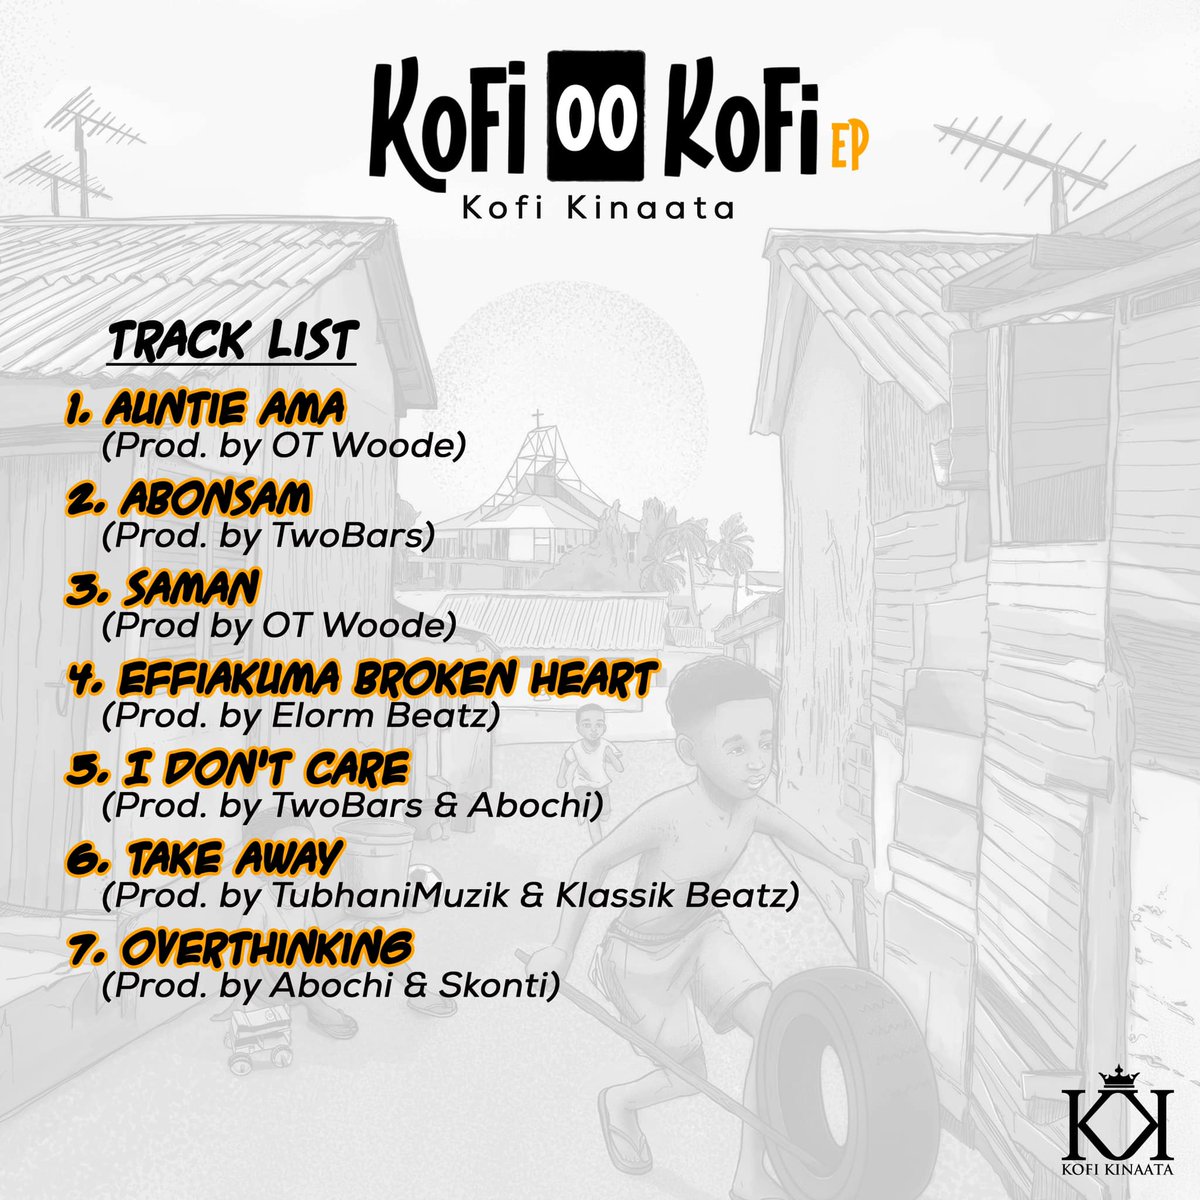 @KofiKinaata shares tracklist for upcoming debut EP ‘Kofi oo Kofi

#empirefm